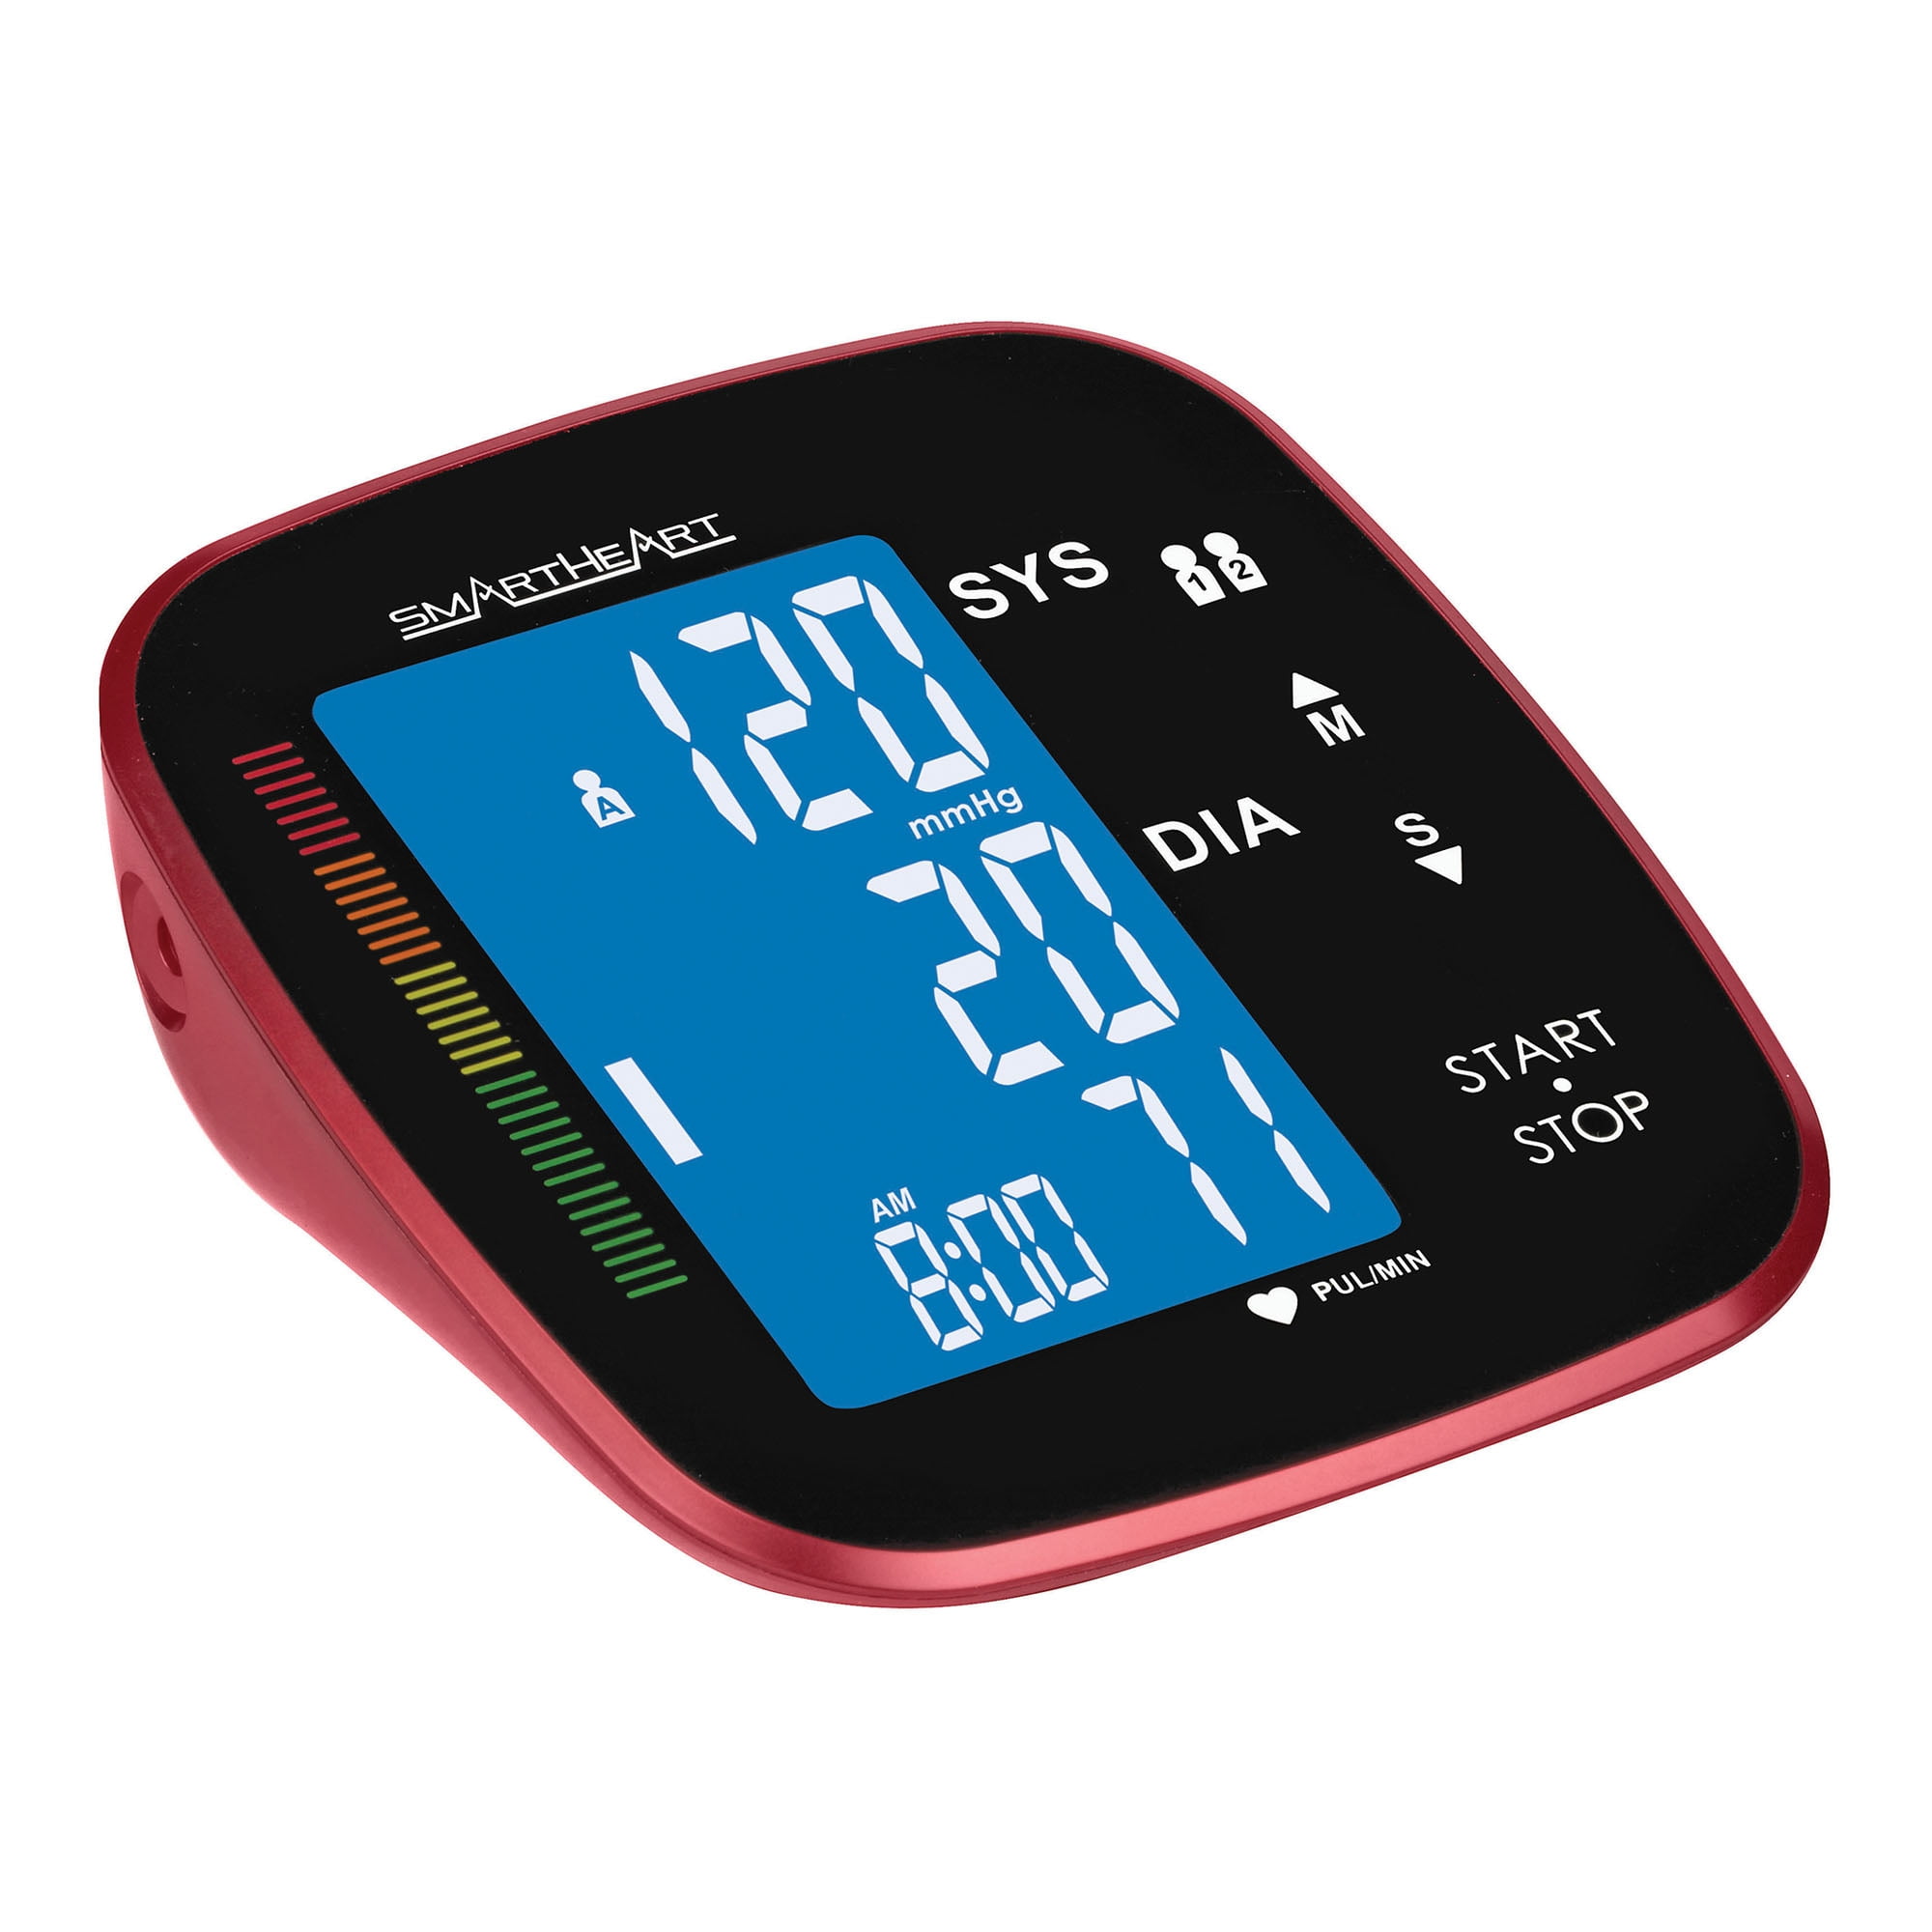 SmartHeart Digital Arm Cuff Blood Pressure Monitor - 9302271